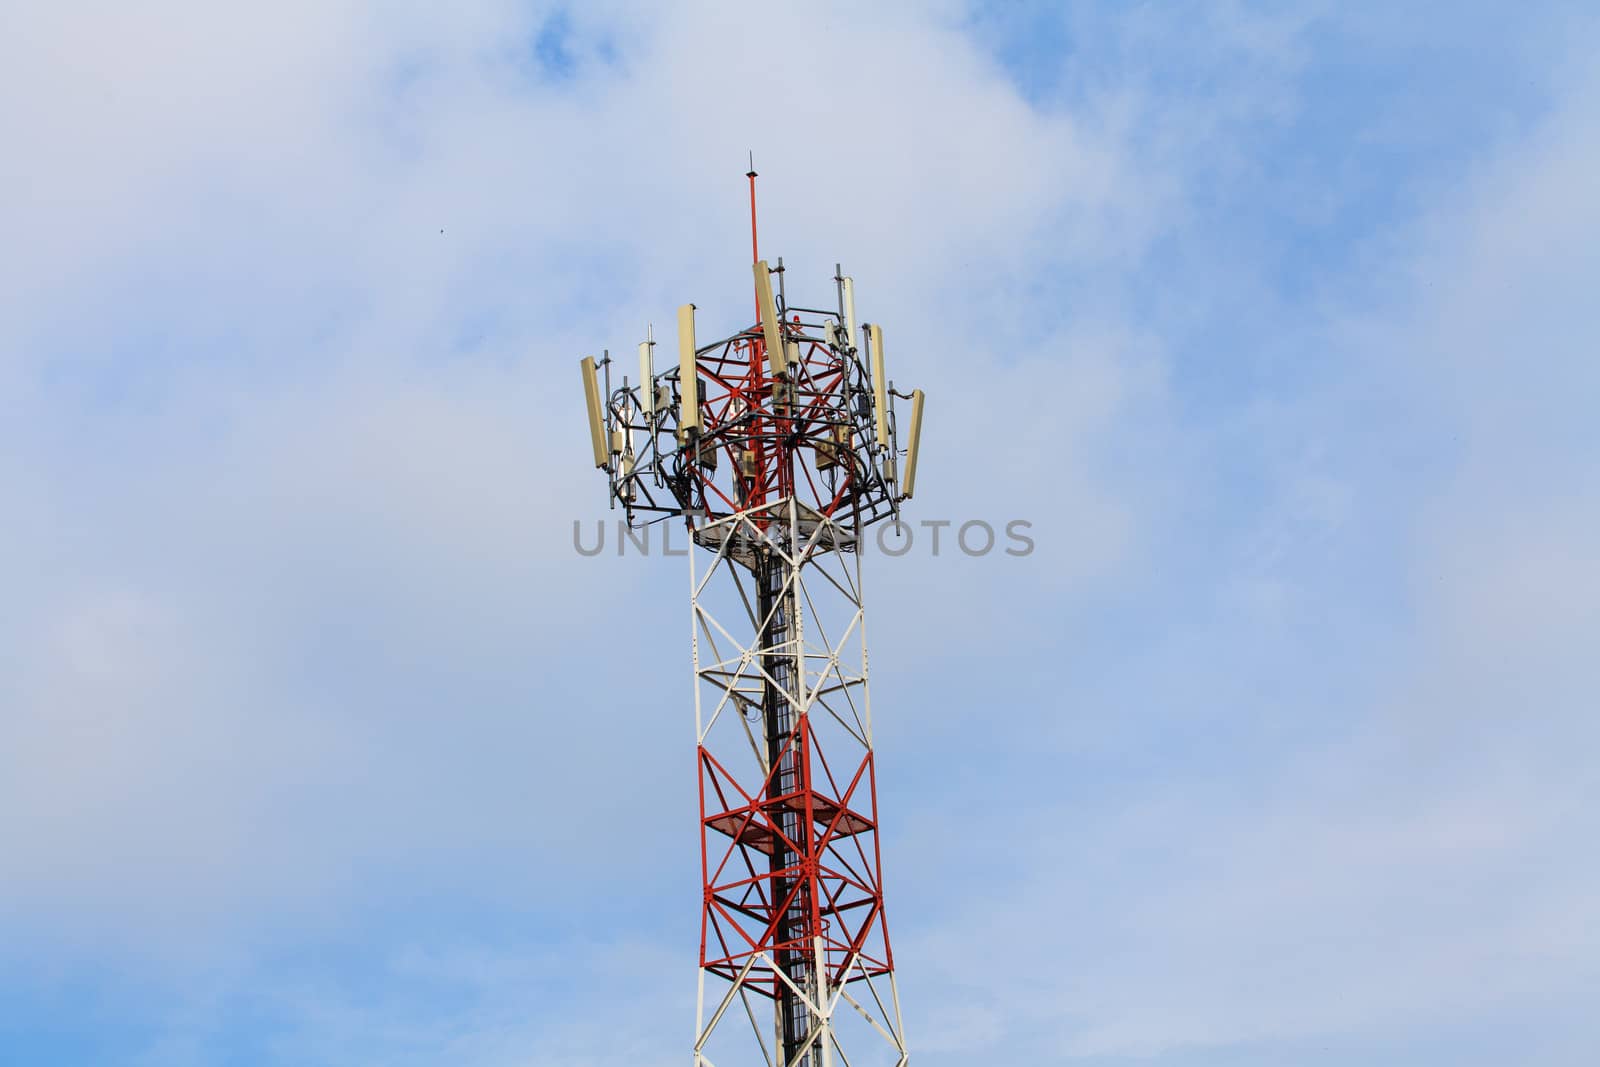 Communication Station with blue sky.